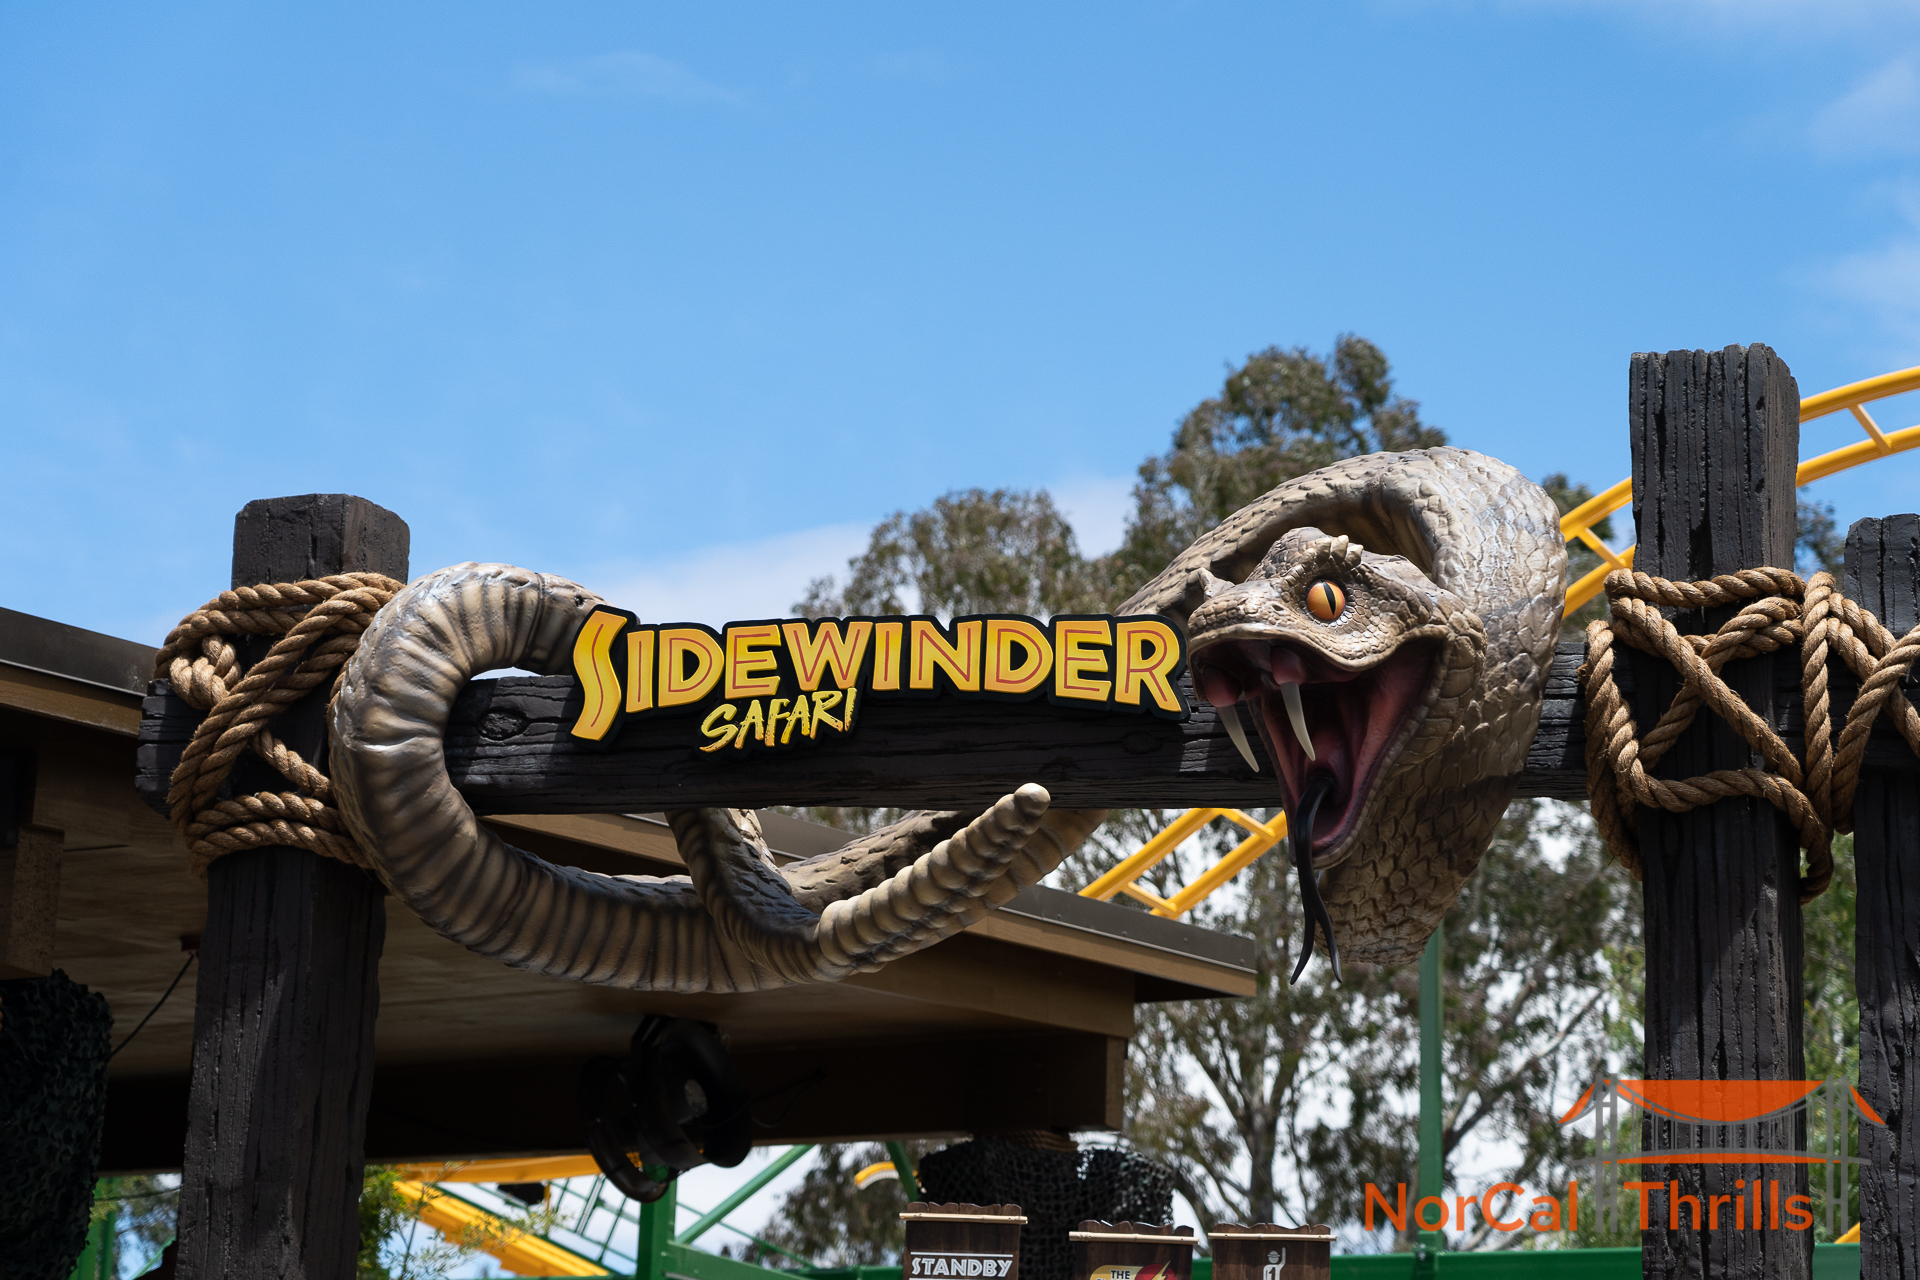 Sidewinder Safari Themeing